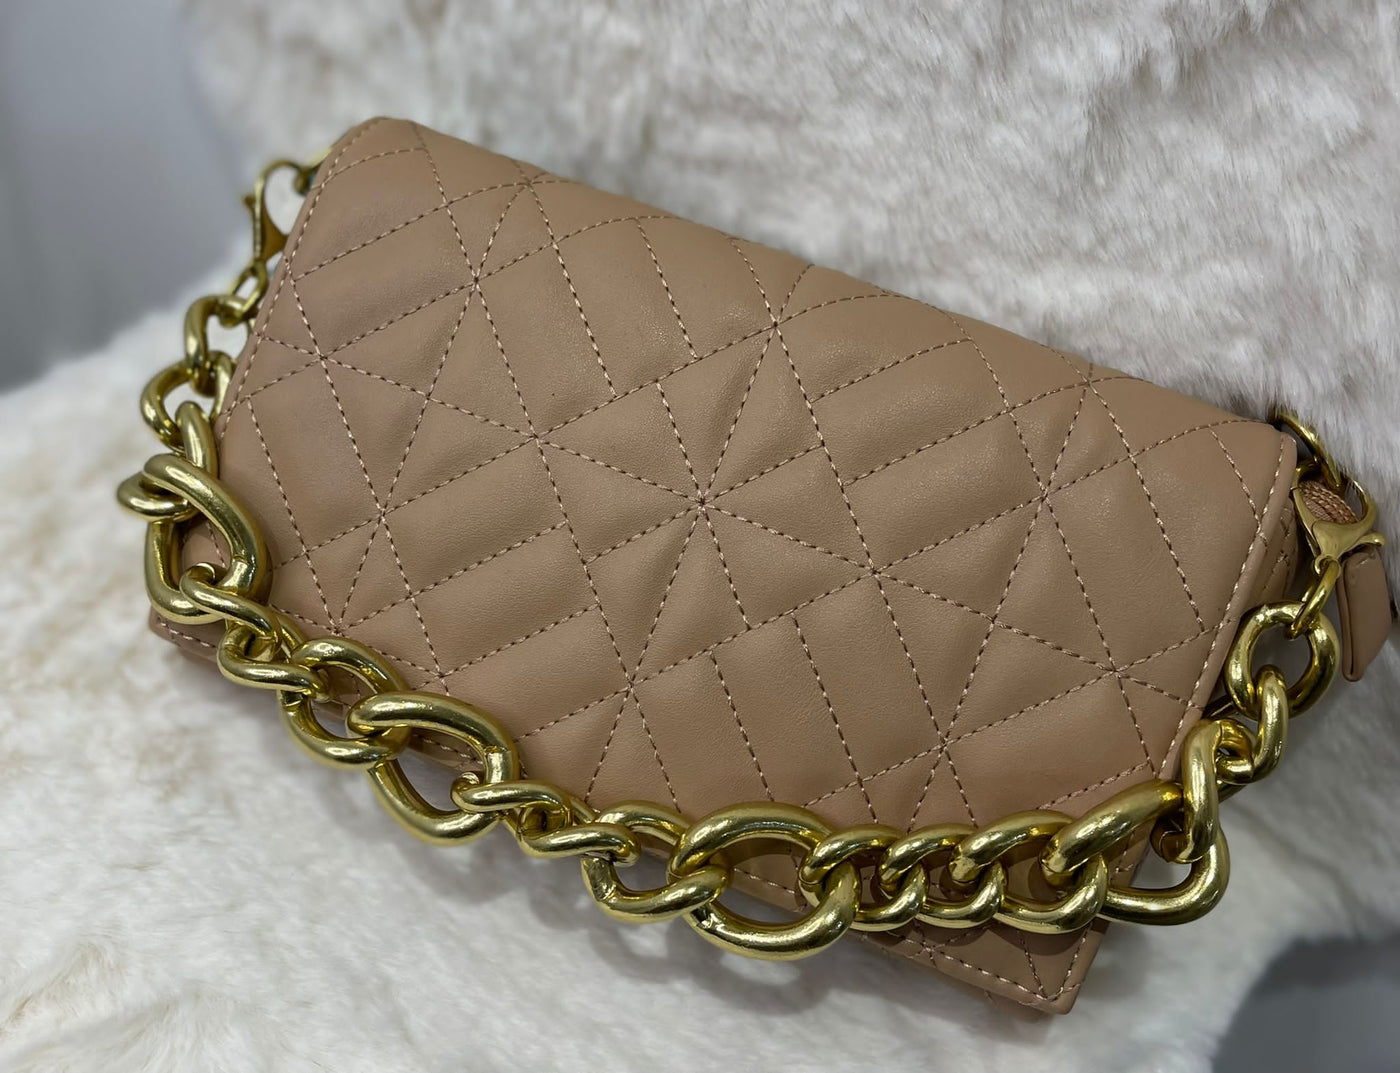 Sand stitch pattern design chunky gold handle bag